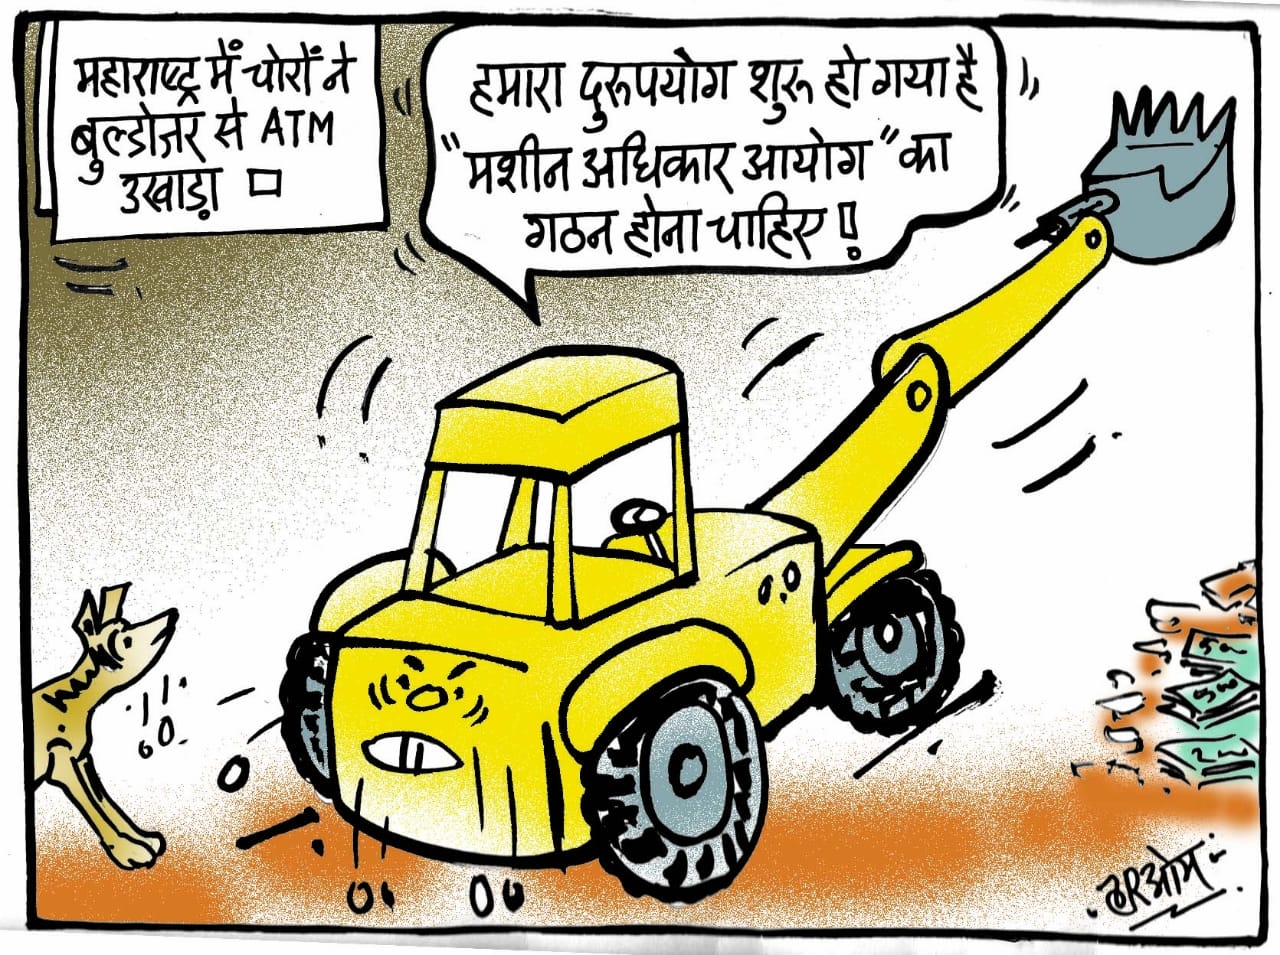 cartoon on buldozer misuse